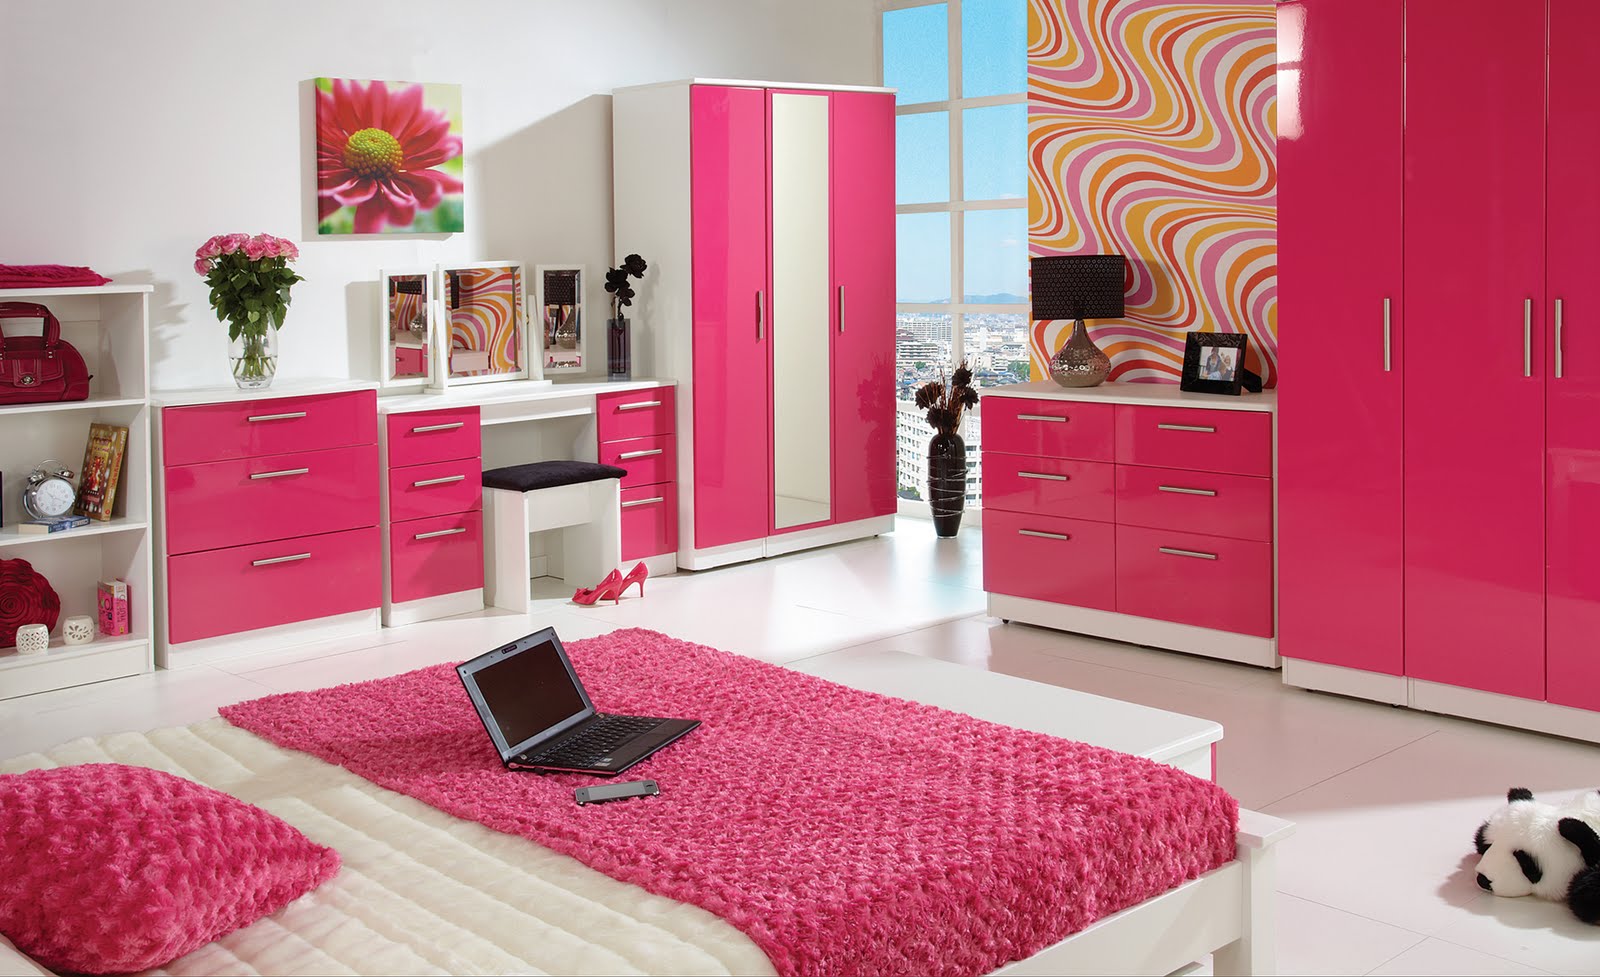 Pink Bedroom Design Bedroom Decoration Teenage Room Ideas Interior Design For Rooms Colors Decorating Teen Modern Looking Modish Bedroom